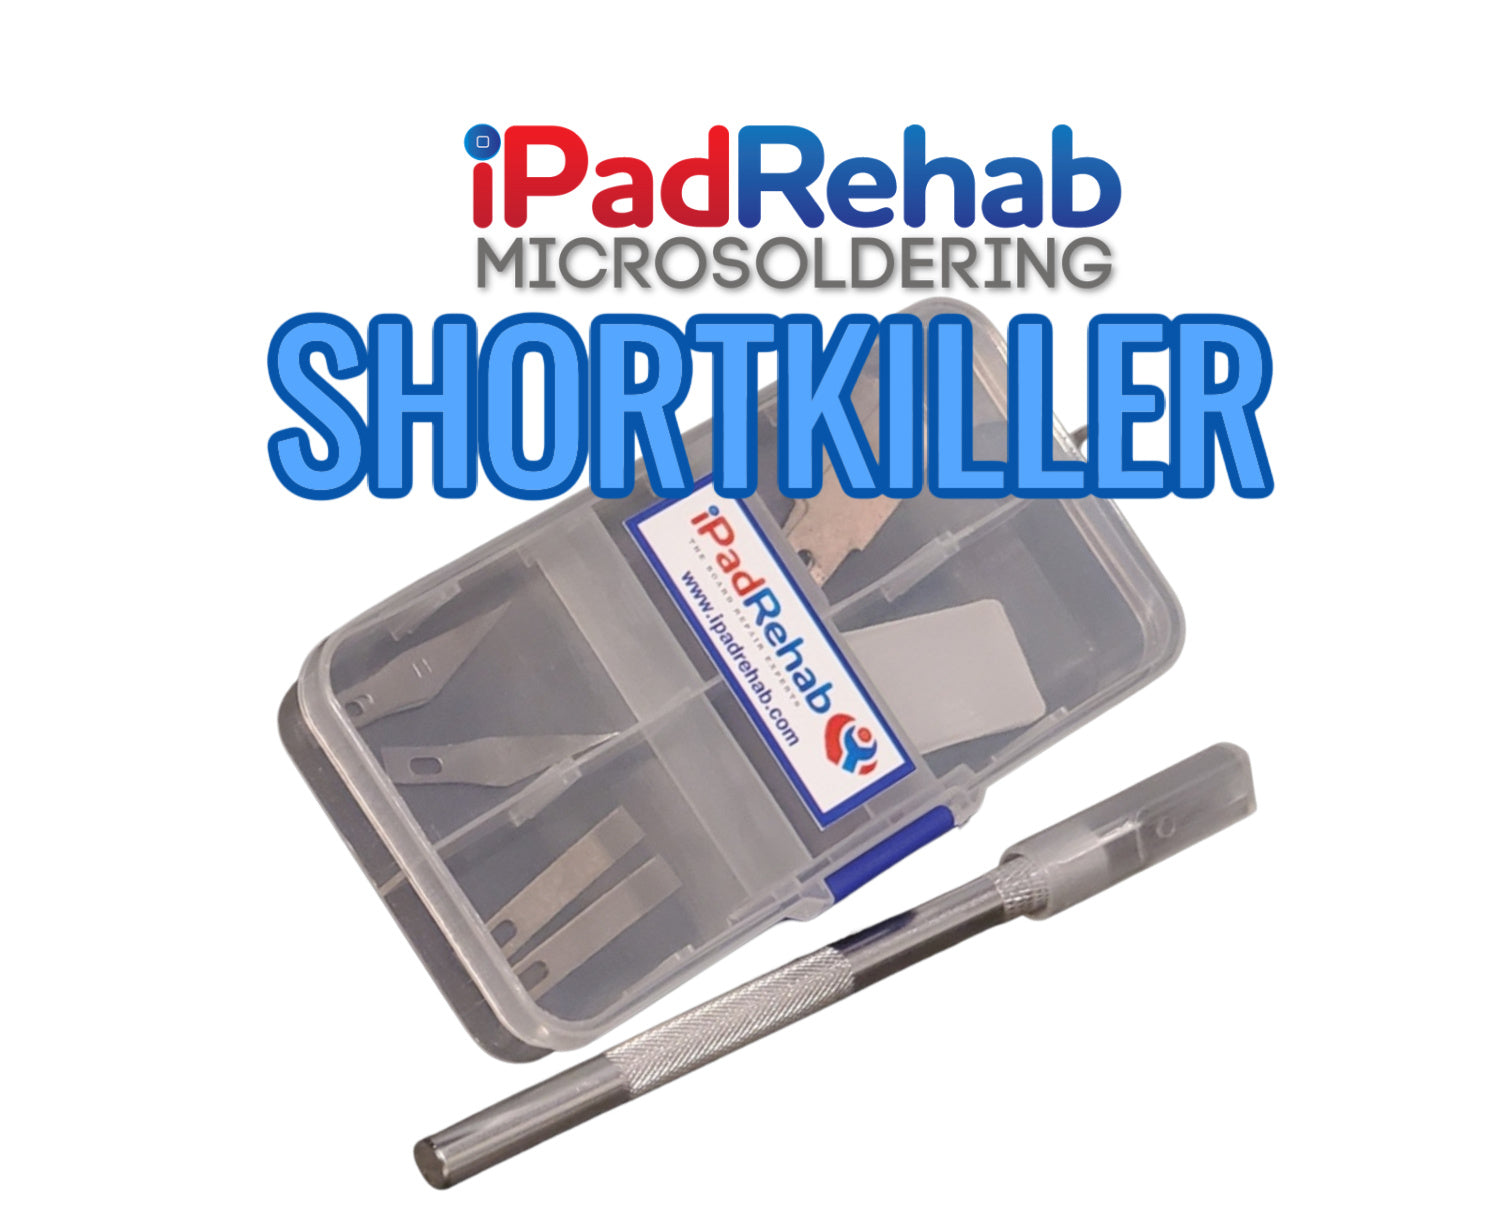 The iPad Rehab Short Killer and Reballing Blade Set